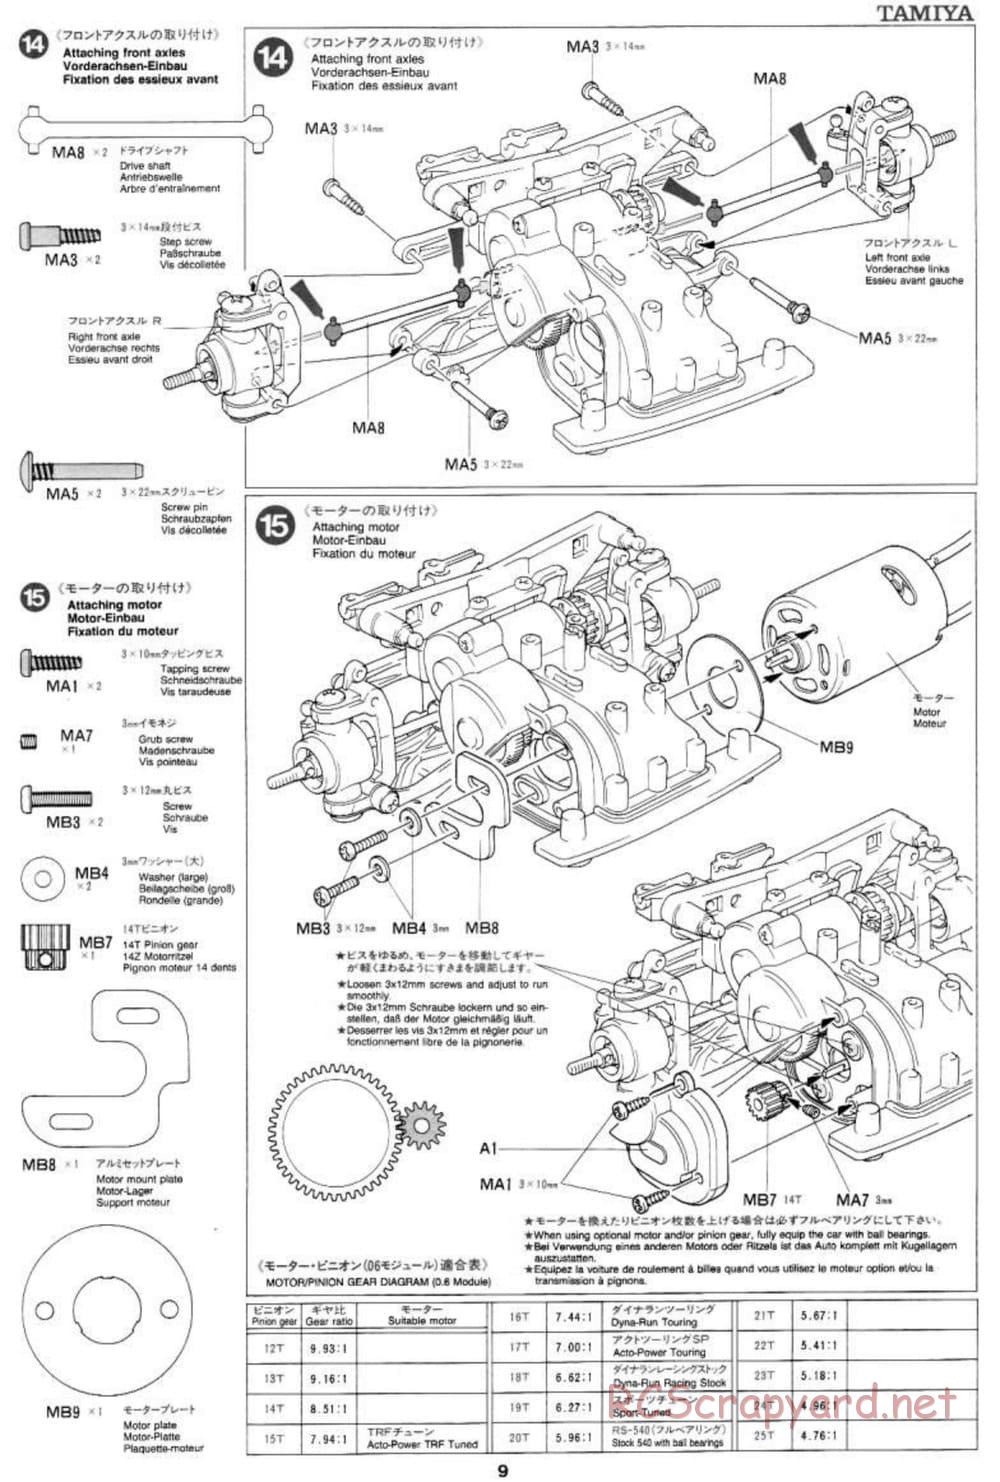 Tamiya - Subaru Impreza WRC 97 - TA-03F Chassis - Manual - Page 9